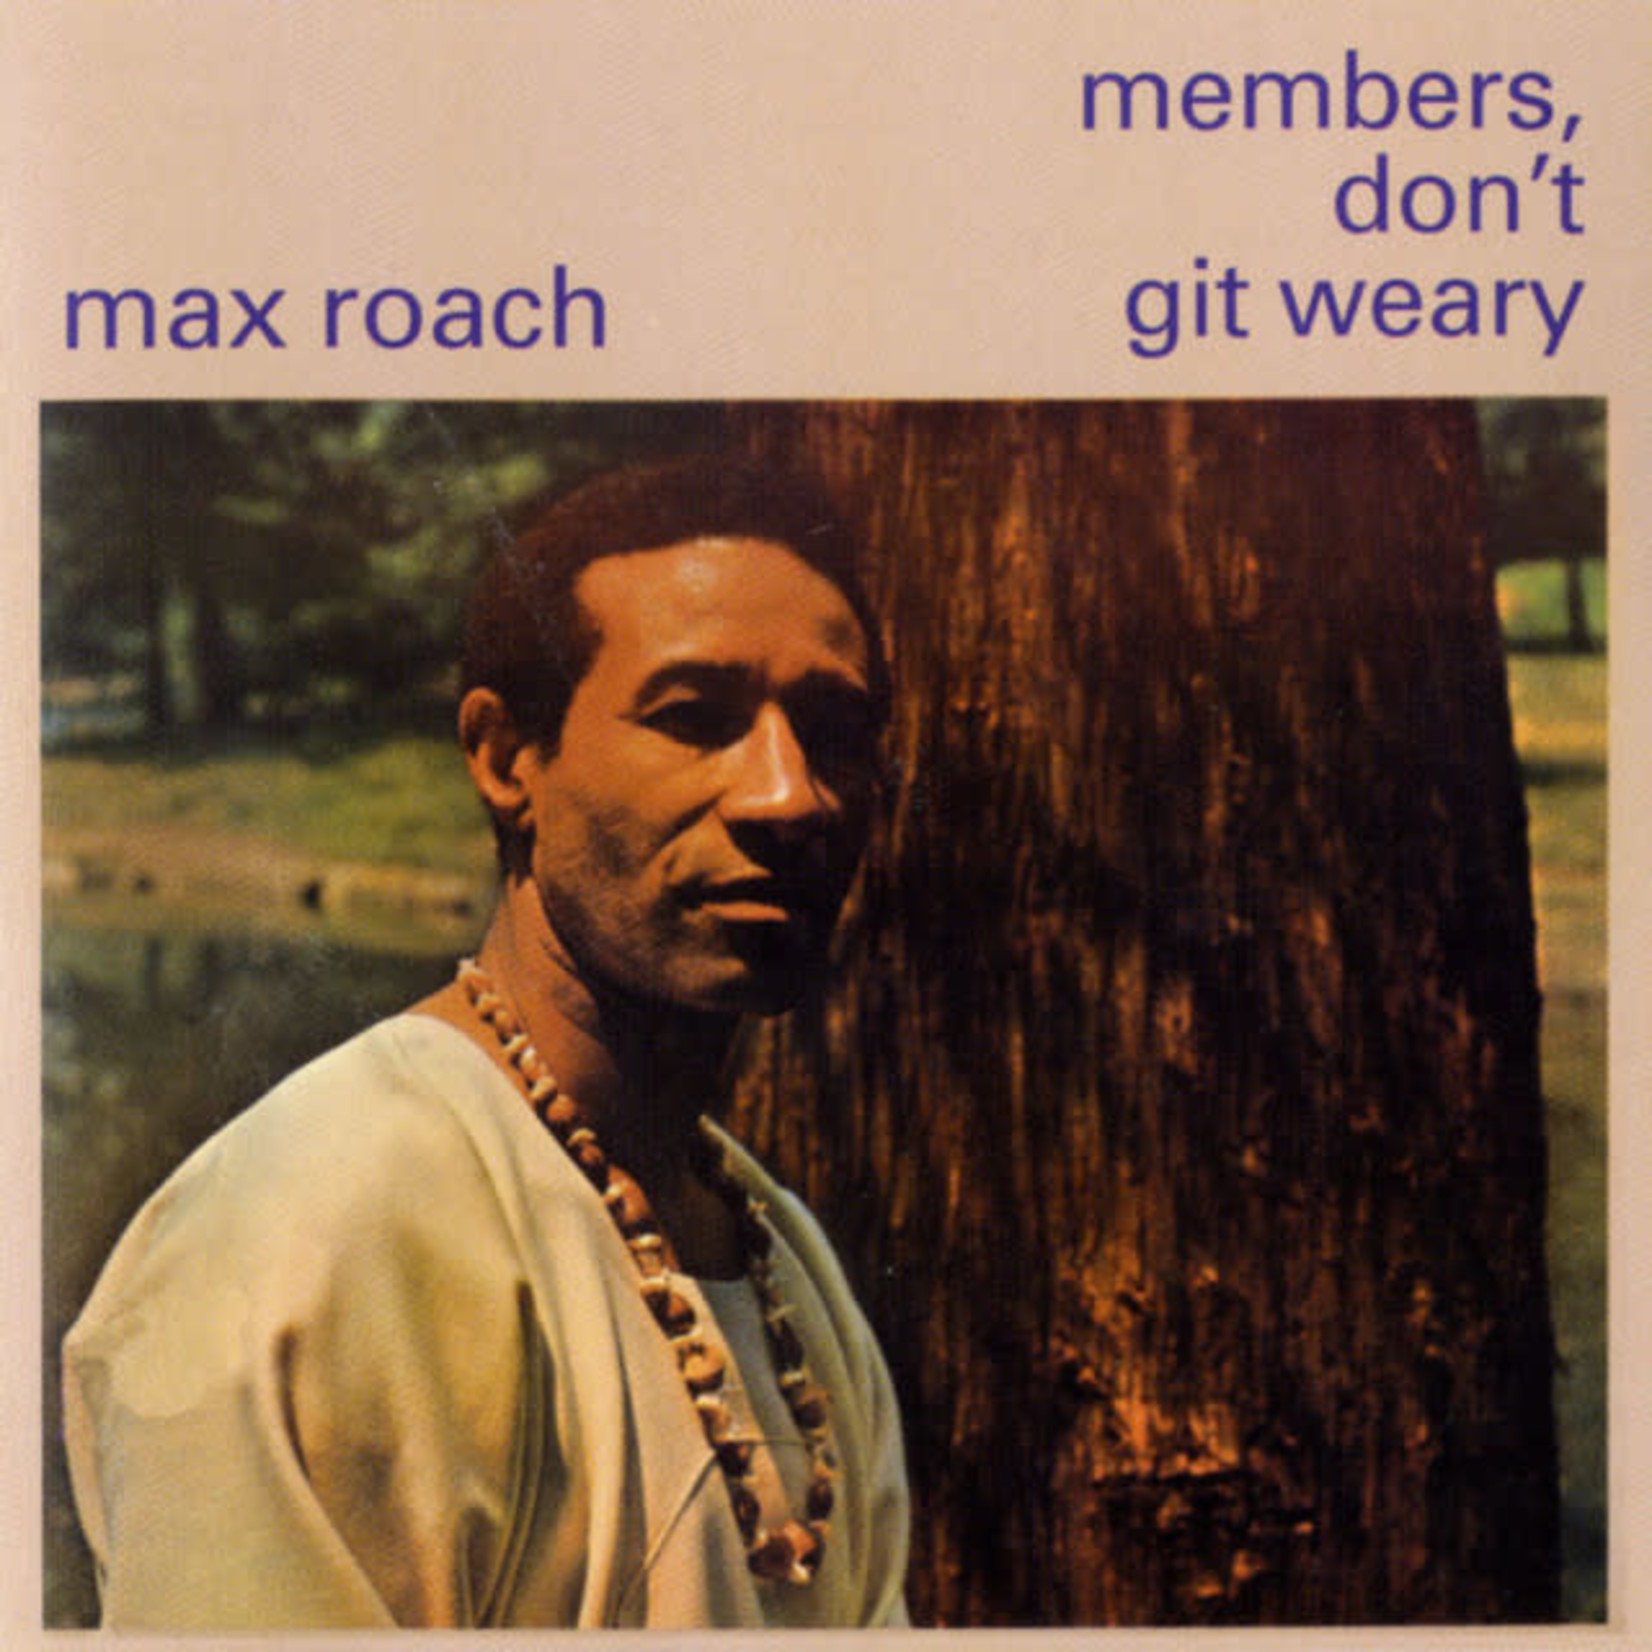 [New] Max Roach - Members, Don't Git Weary